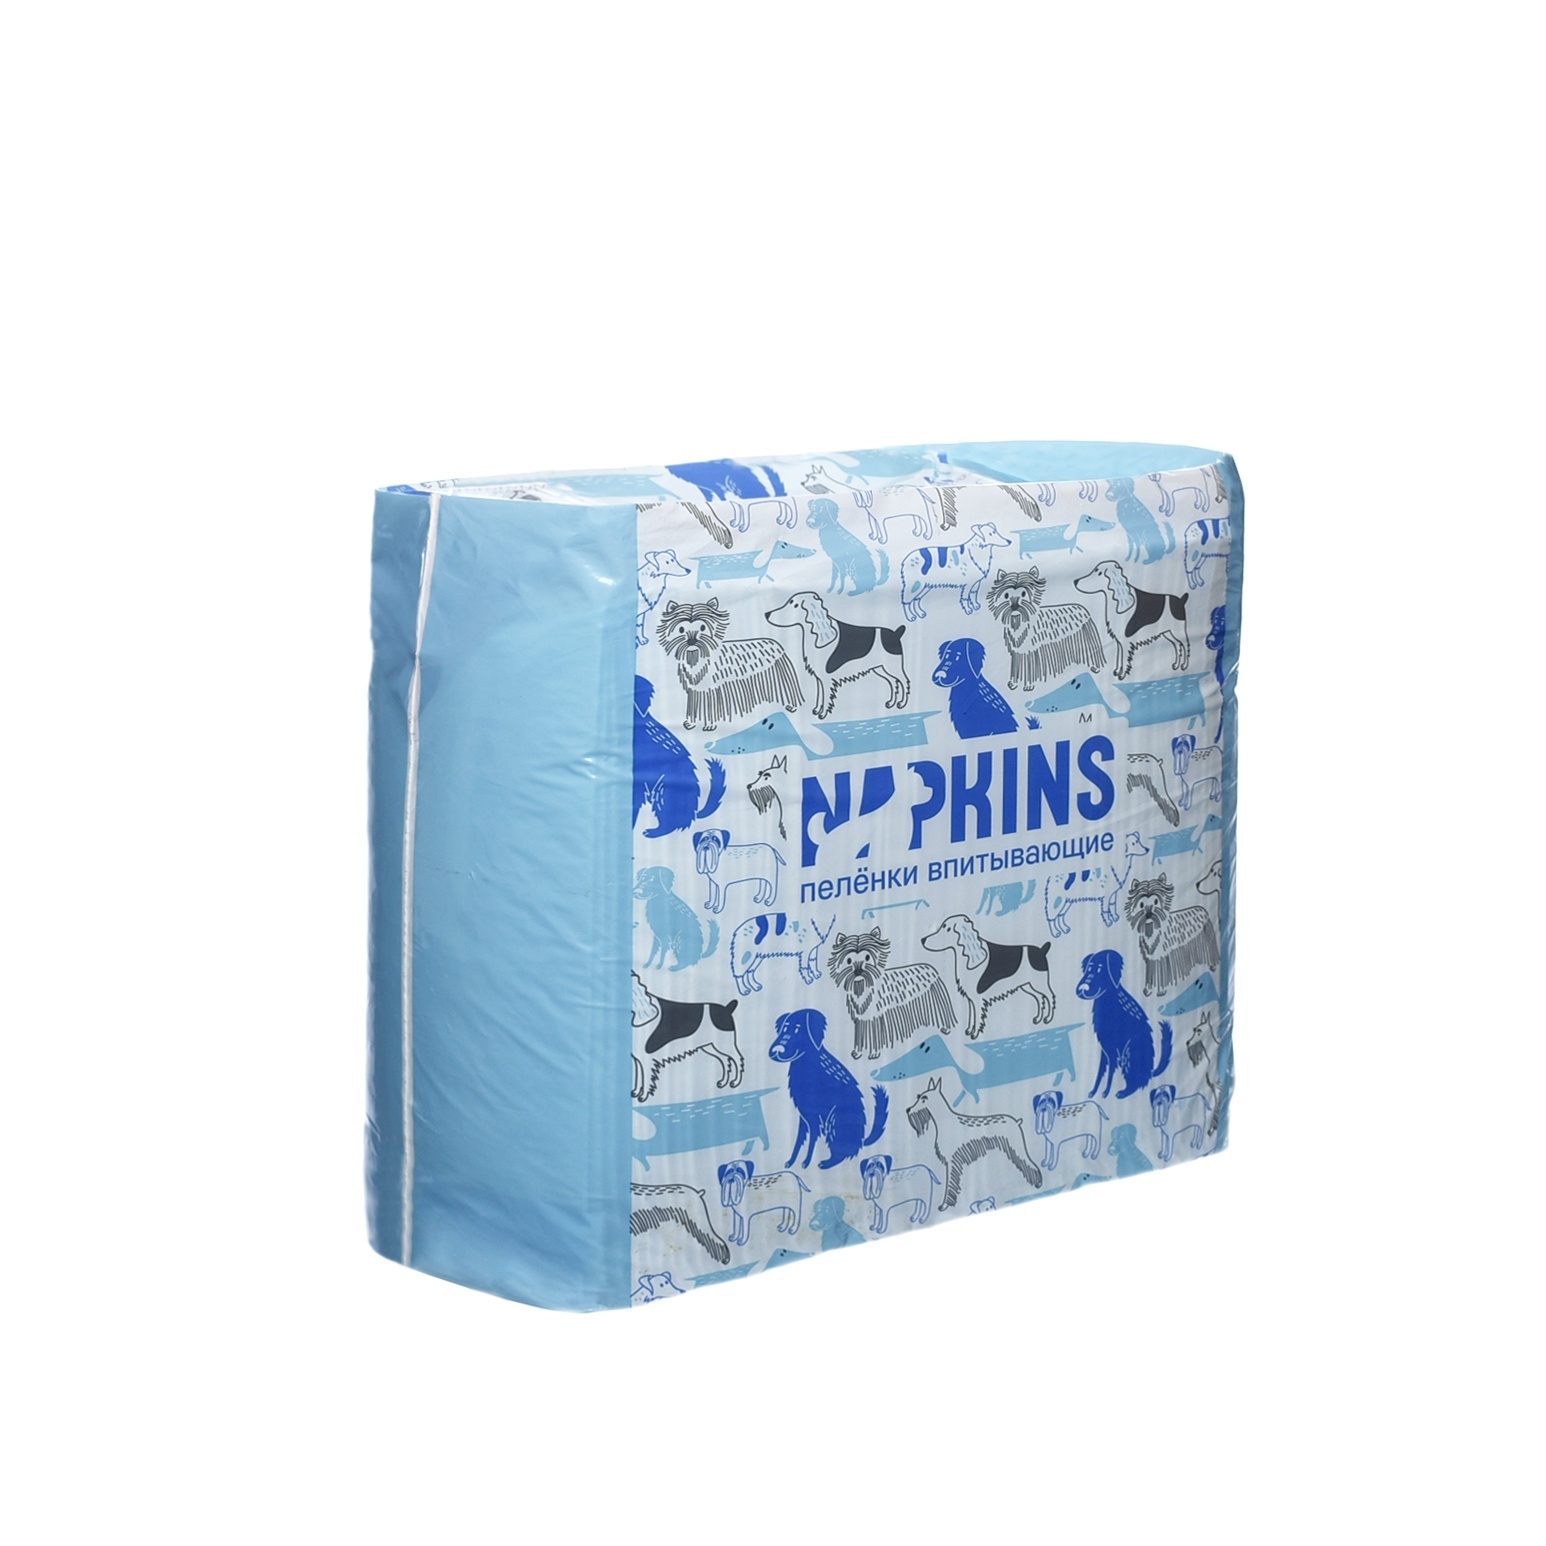 NAPKINS NAPKINS гелевые пелёнки для собак 60х40 (300 г) napkins napkins гелевые пелёнки для собак 60х60 30 шт